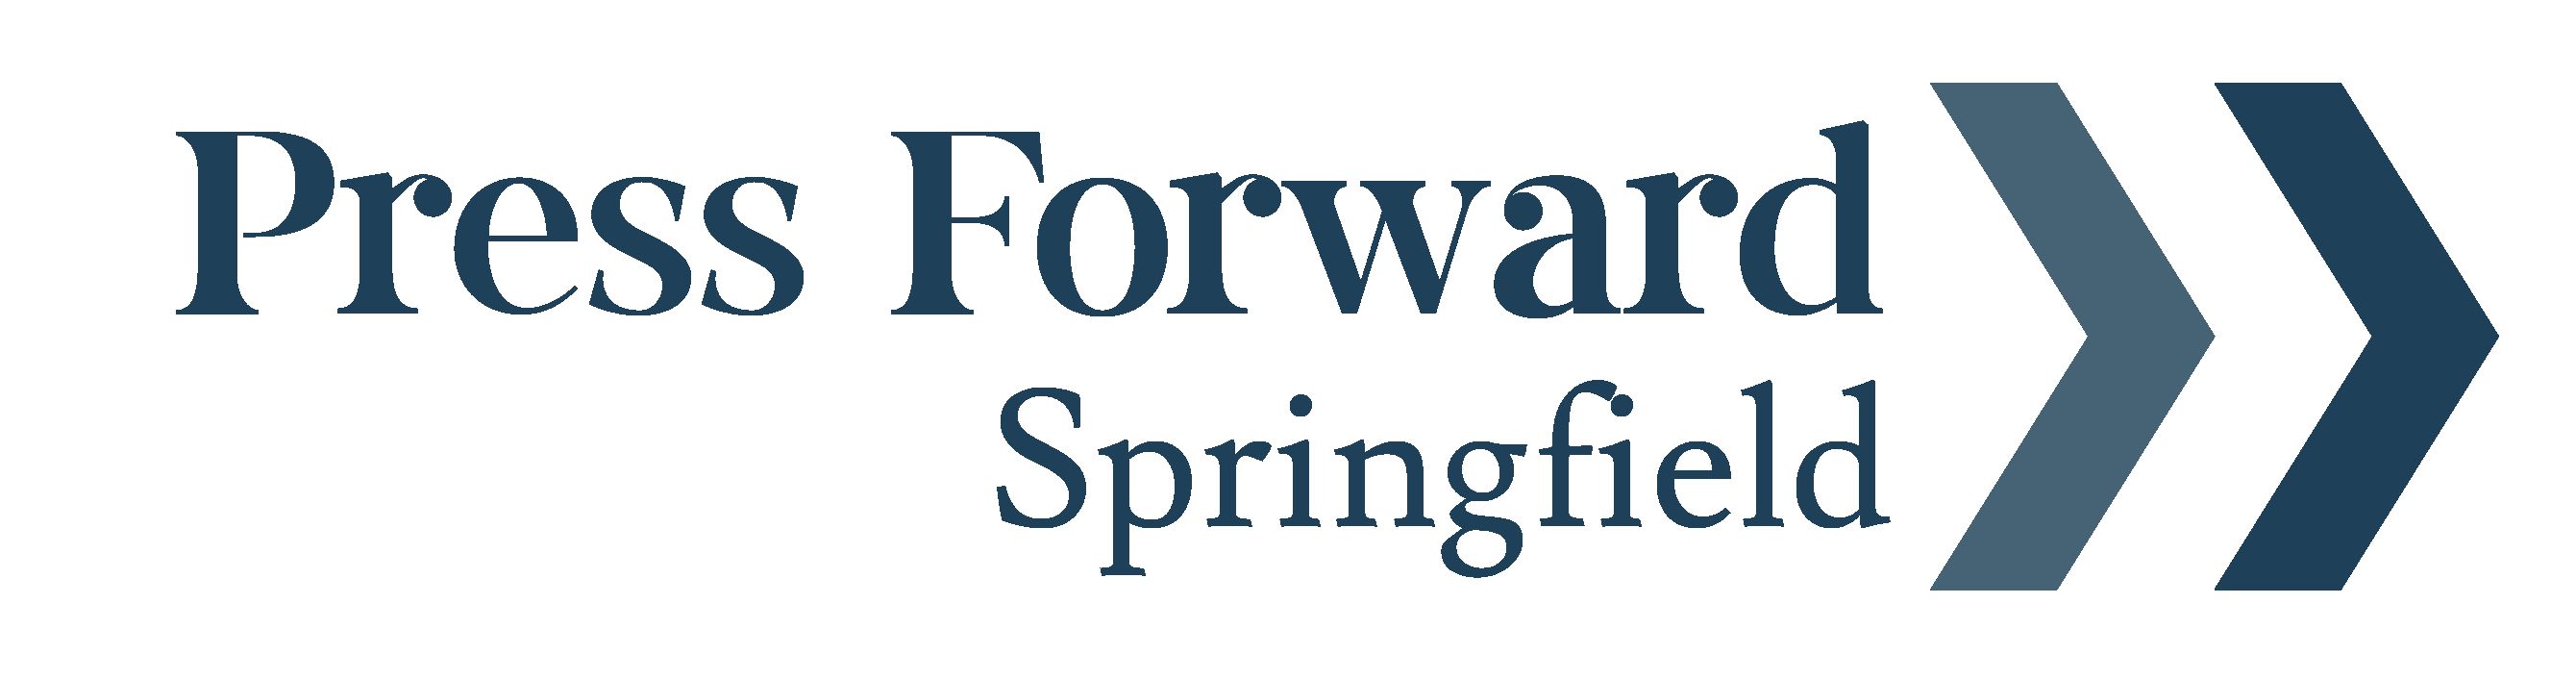 Press Forward Springfield logomark